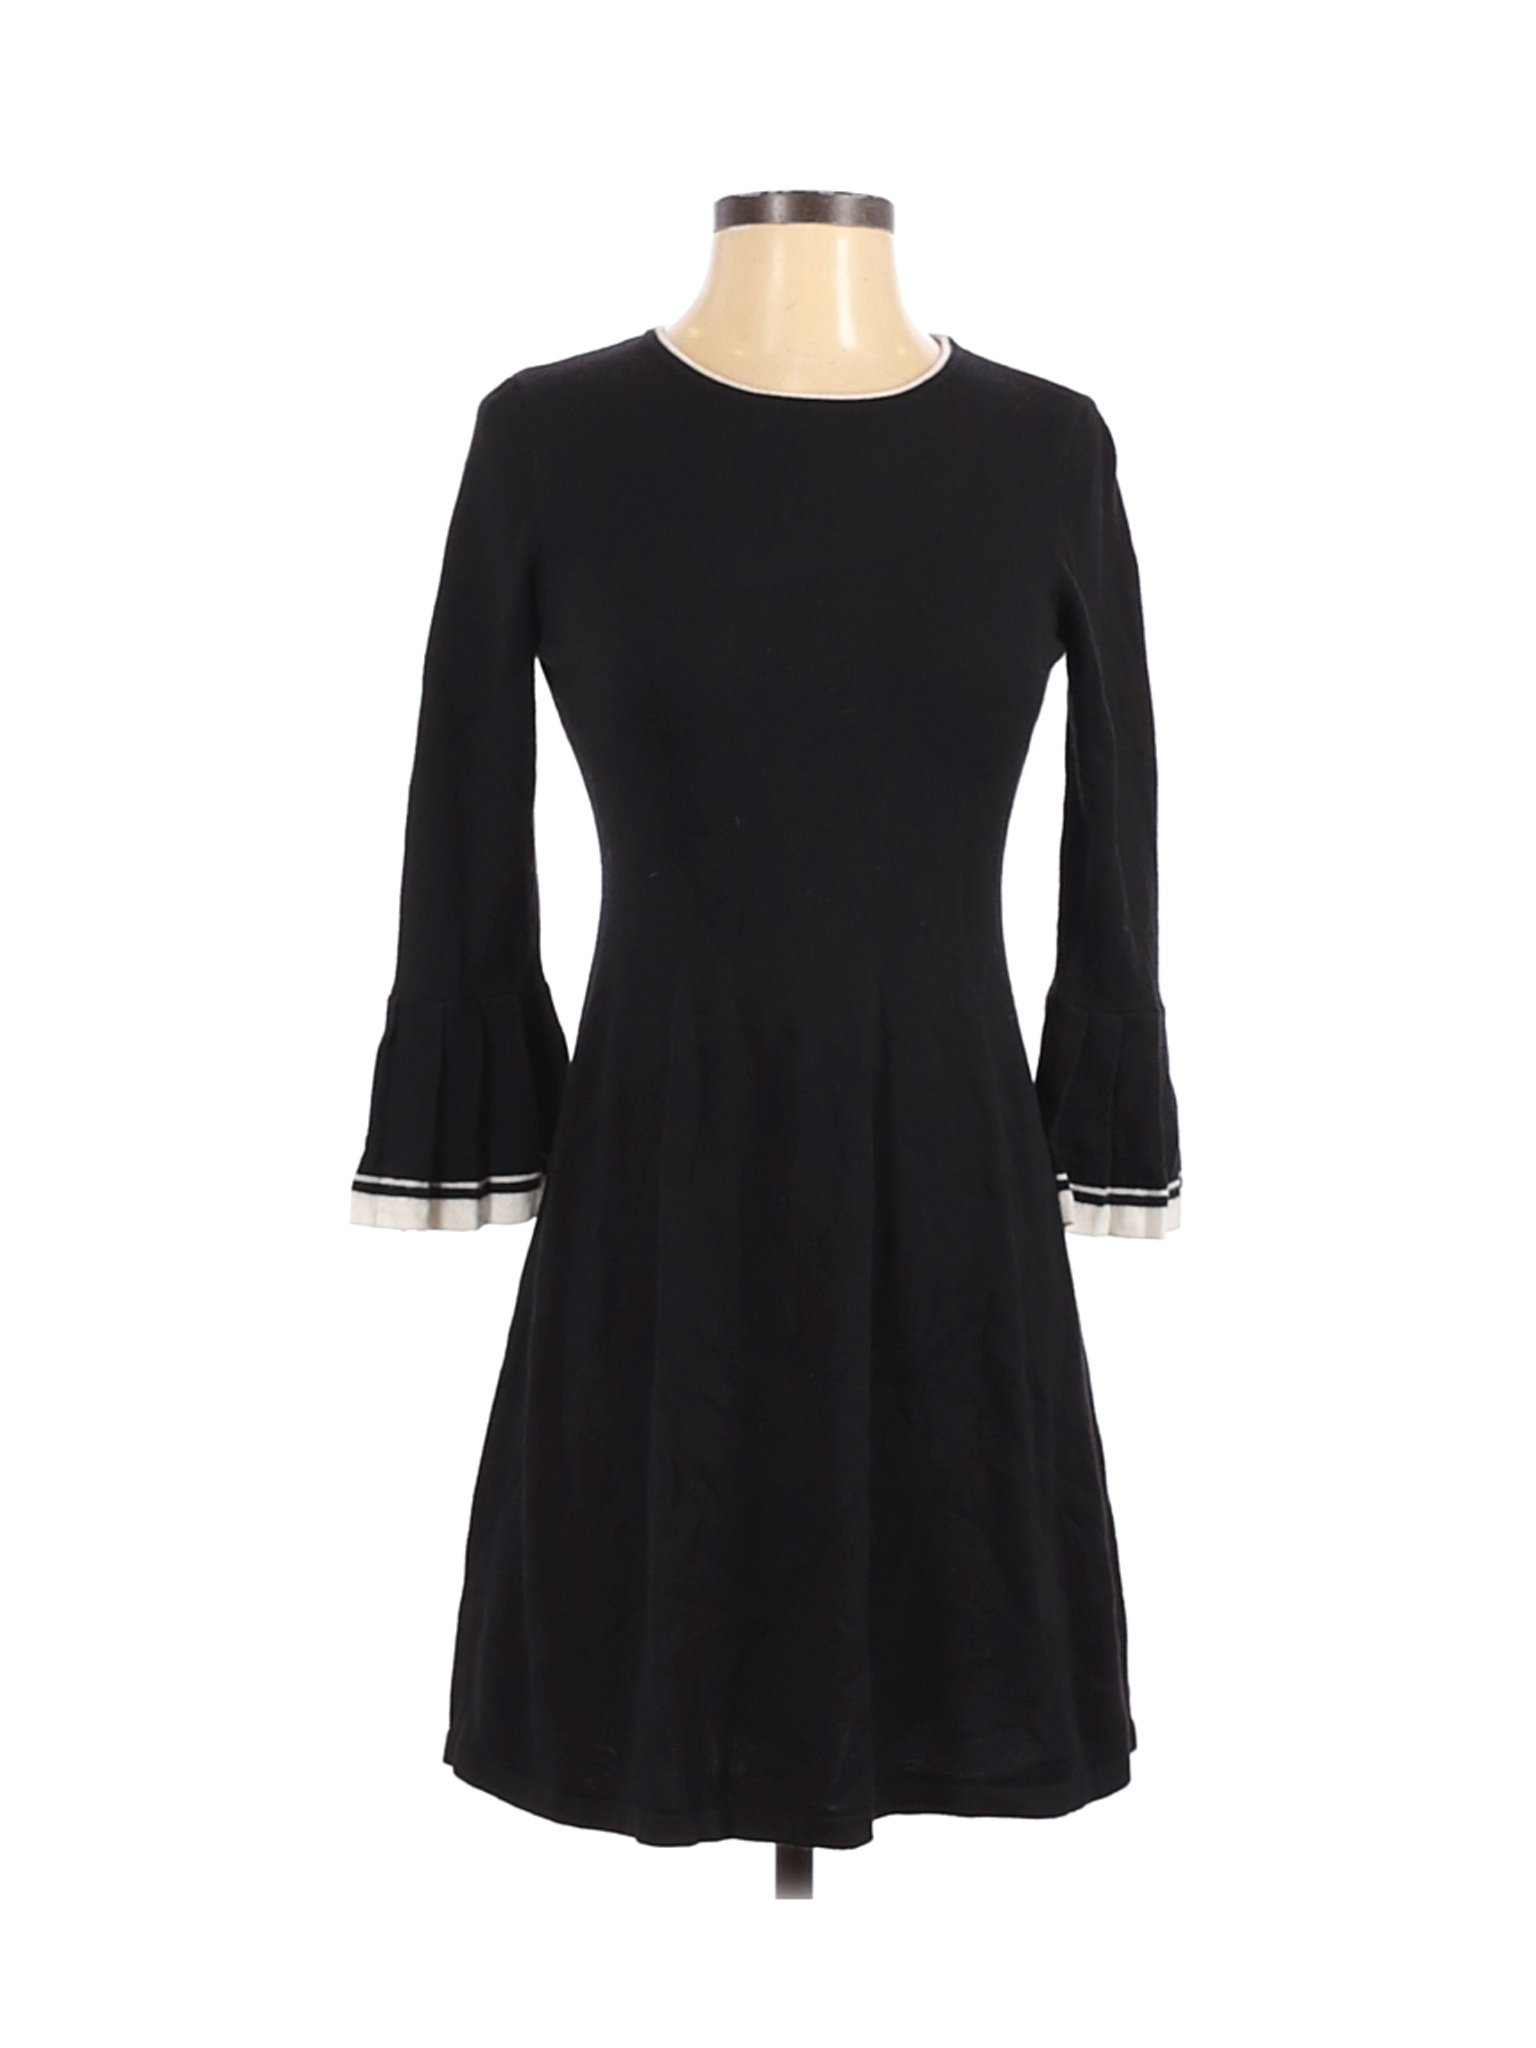 Adrienne Vittadini Women Black Casual Dress S | eBay